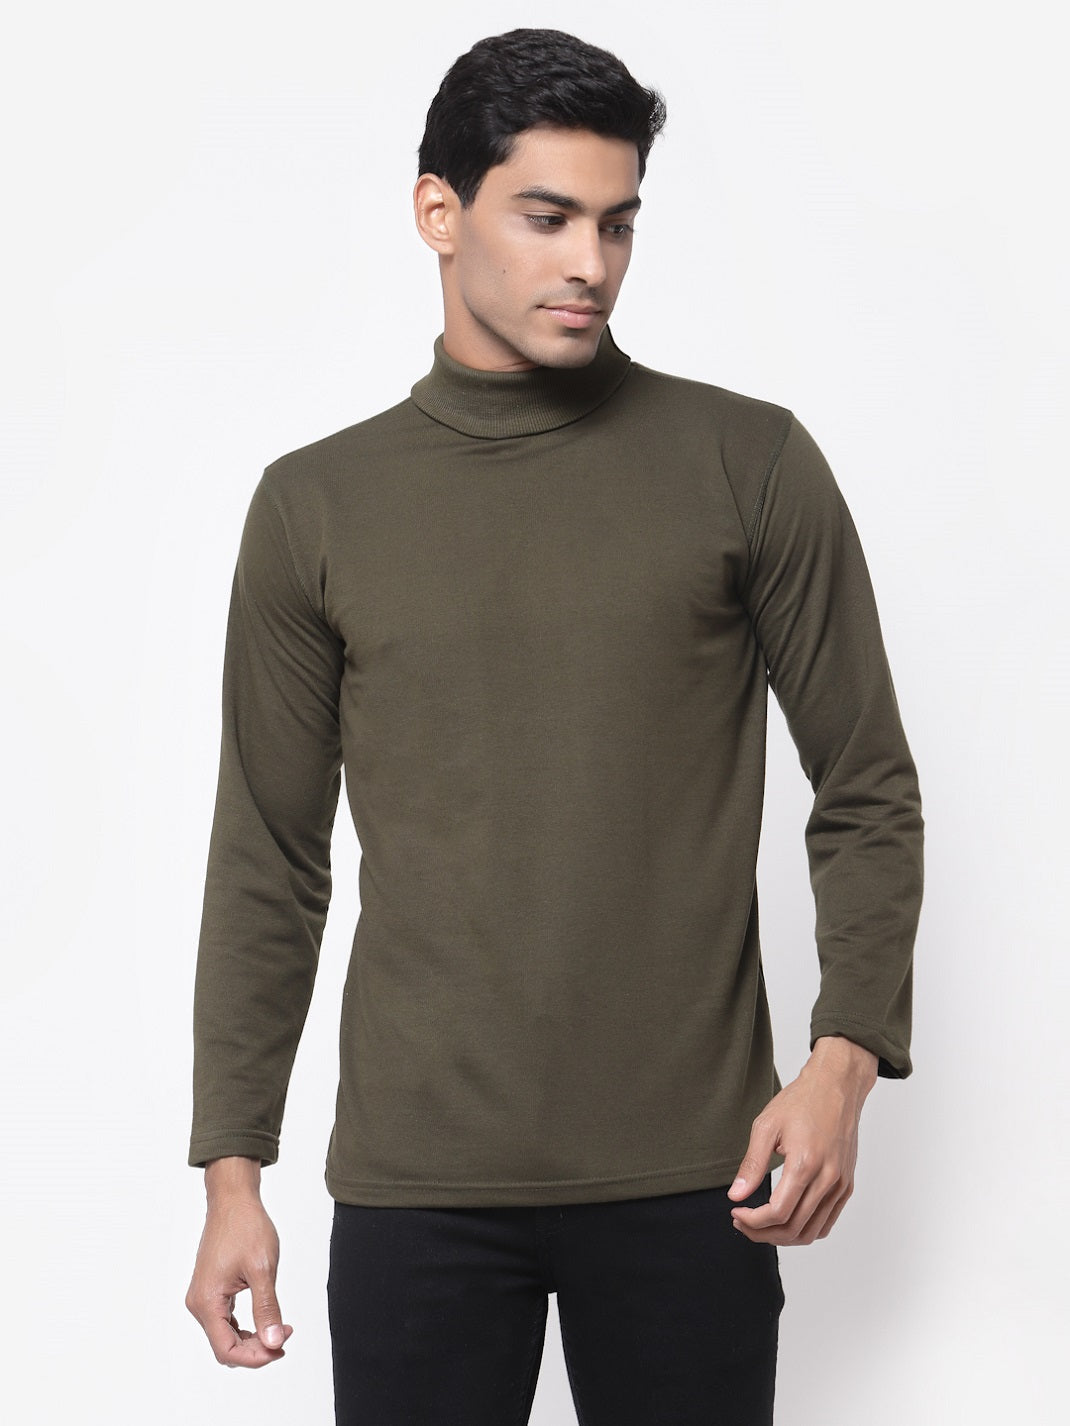 Men's Cotton Solid Full Sleeve Turtle Neck T Shirt for Men